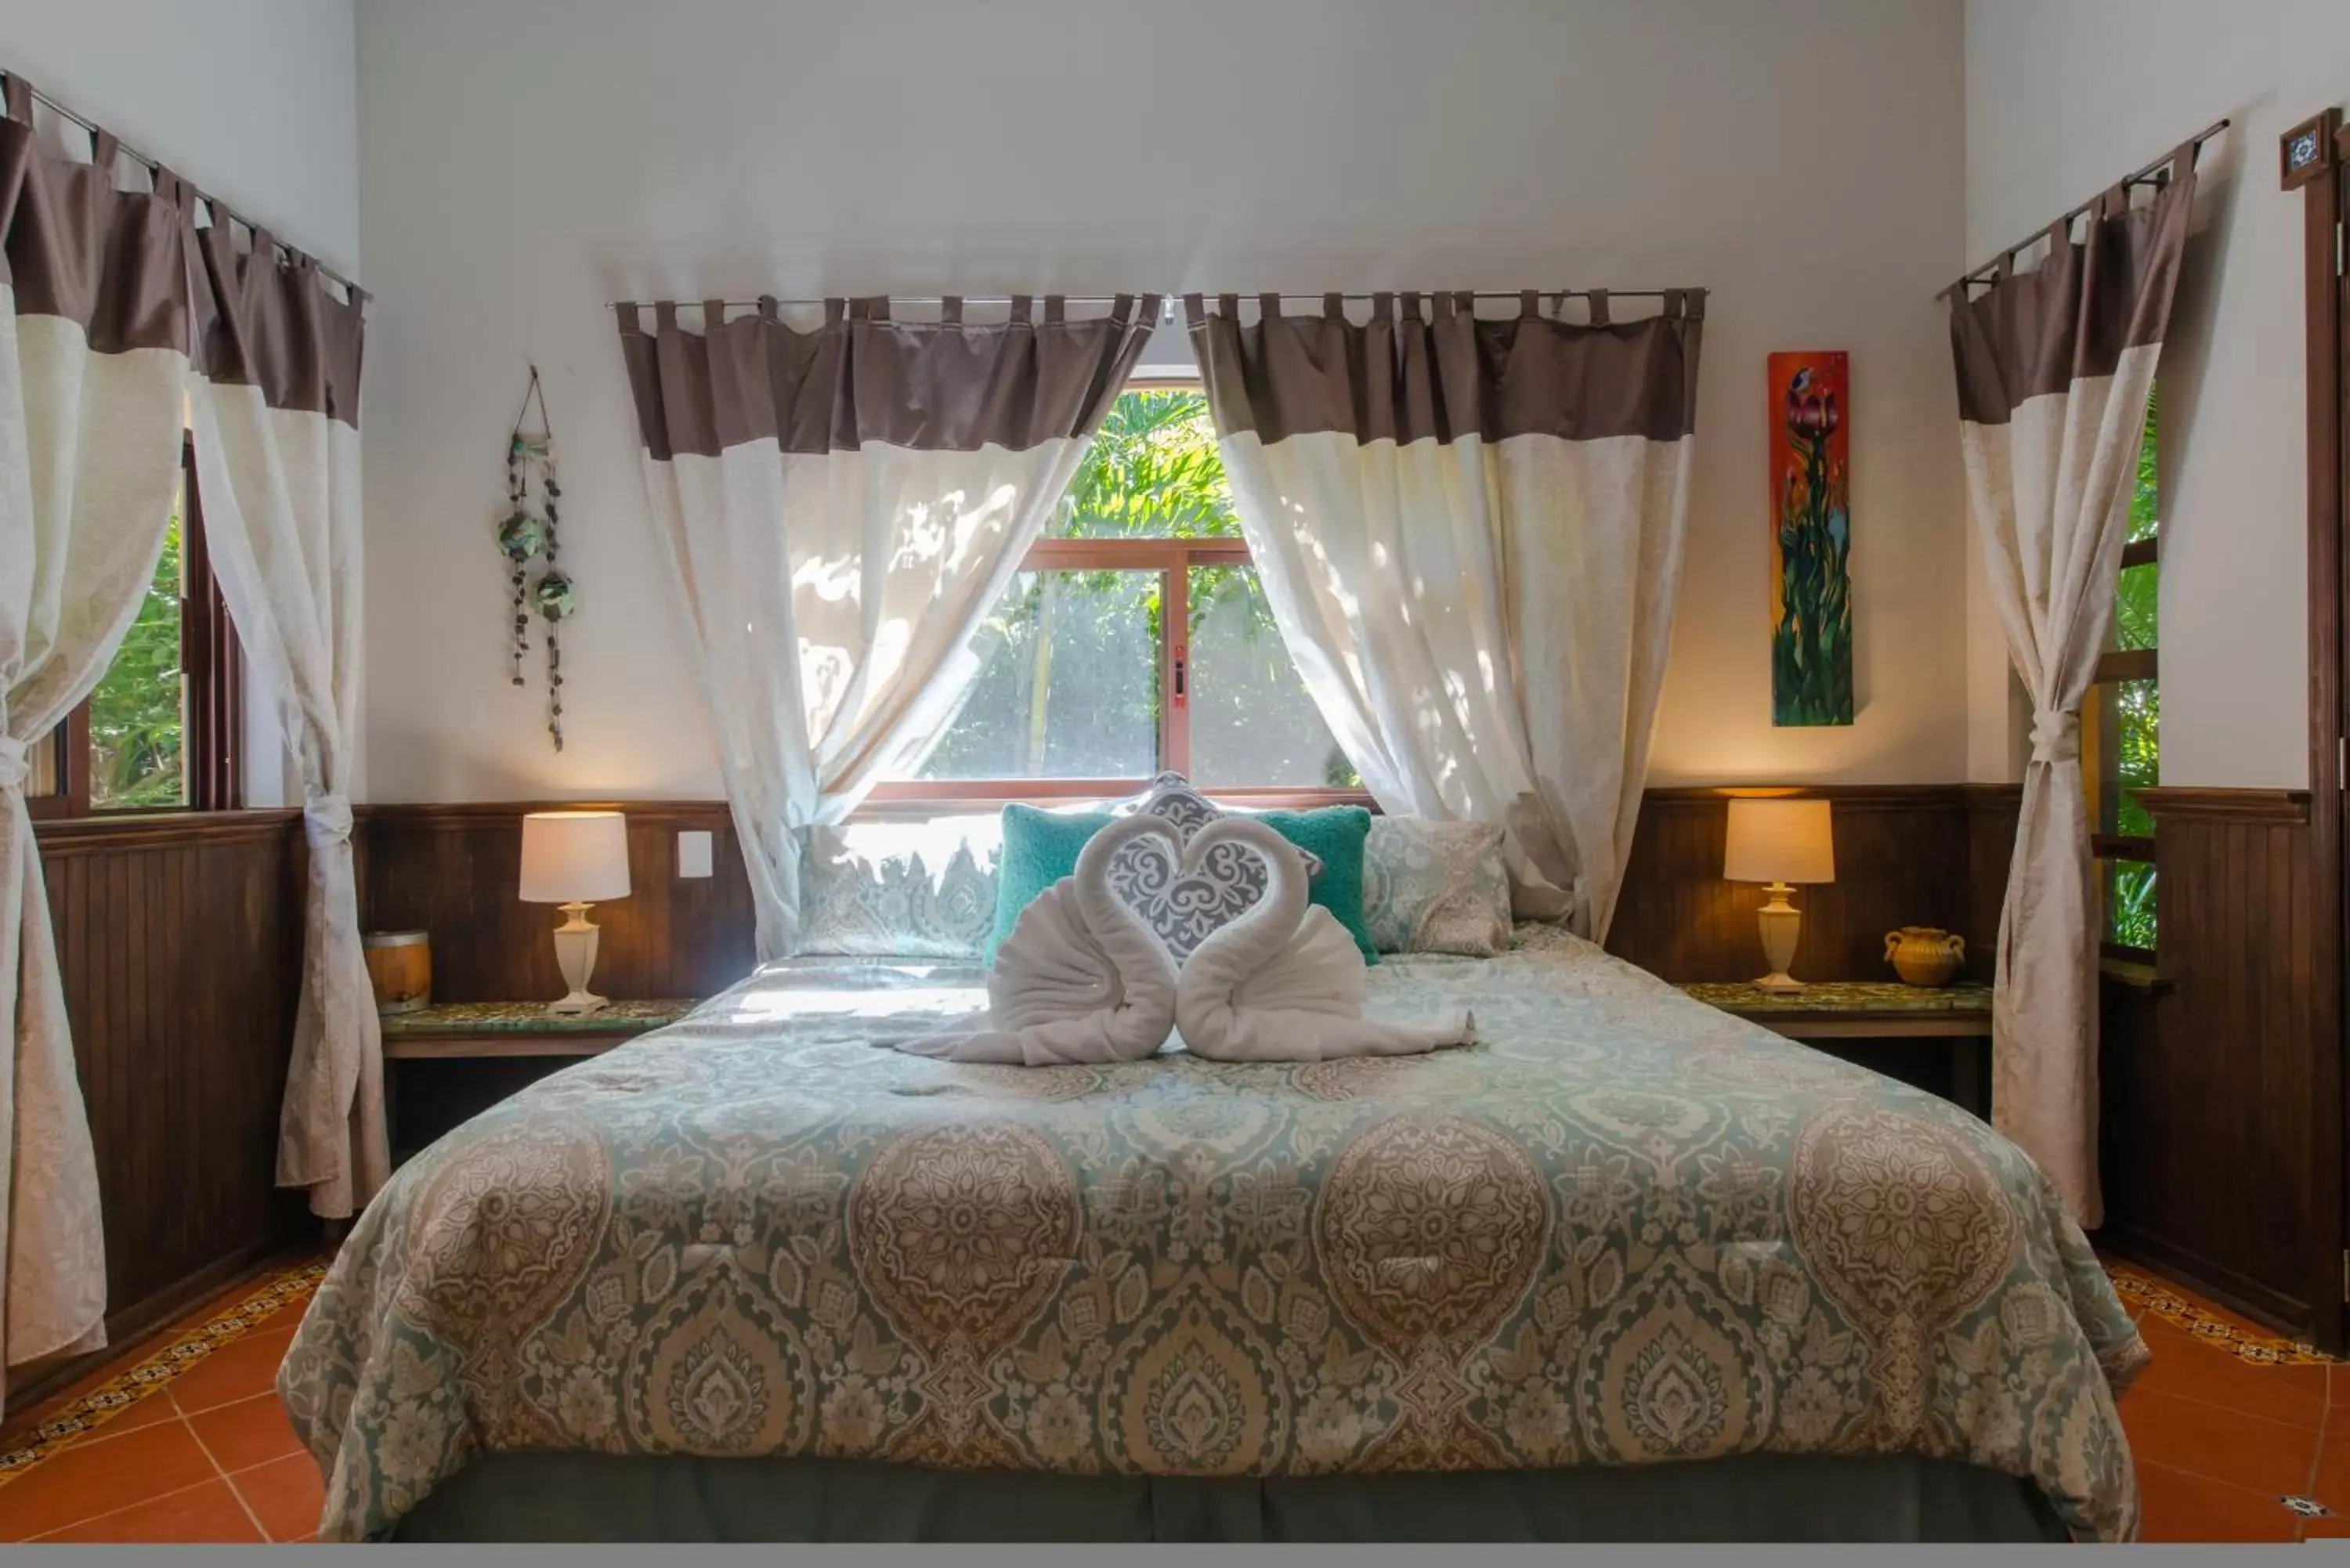 Bed in Hacienda Xcaret